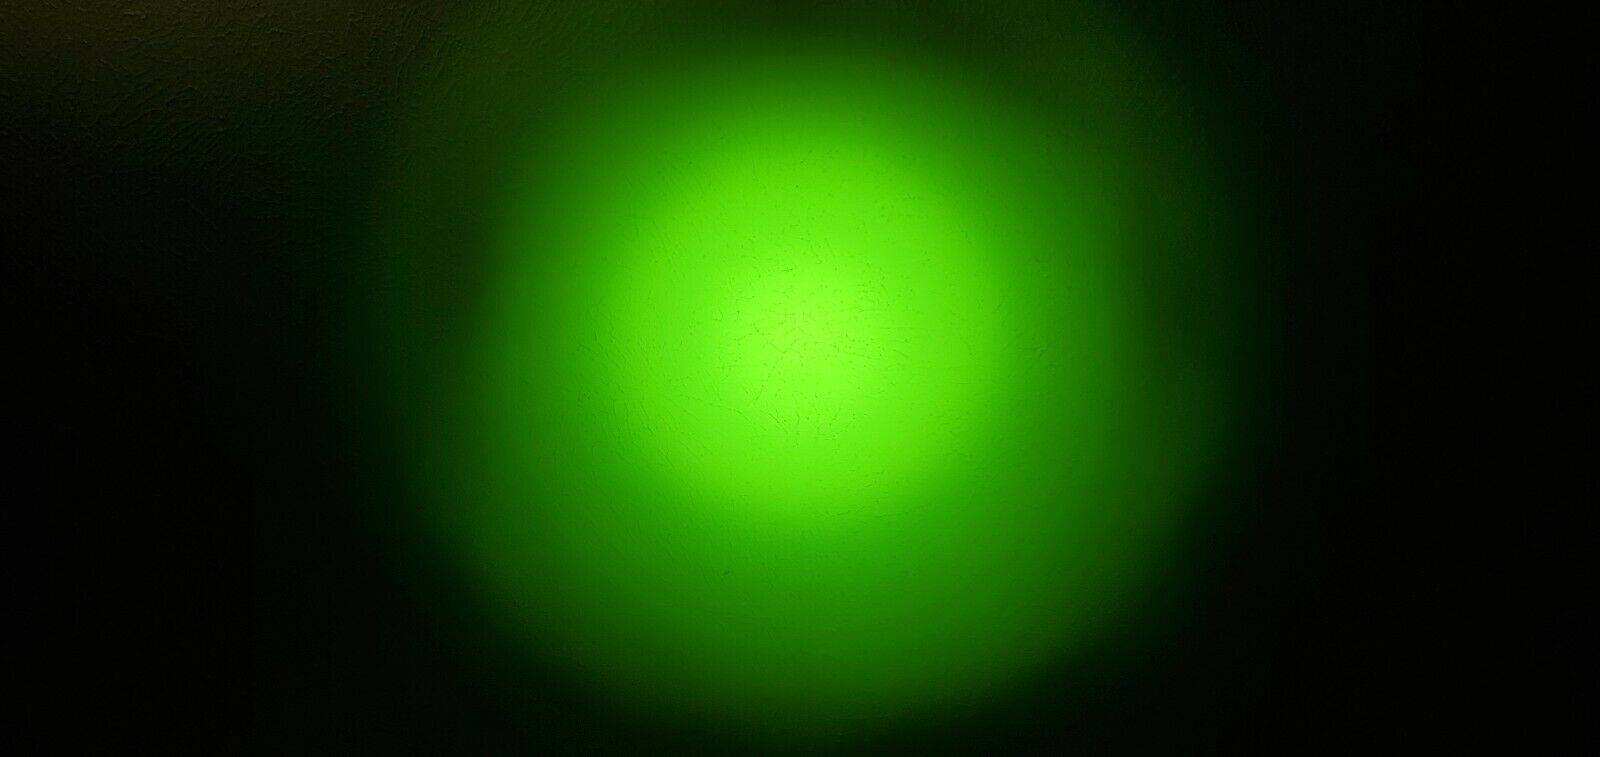 Emisar D4v2 Titanium Osram W2 Green High Power LED Flashlight